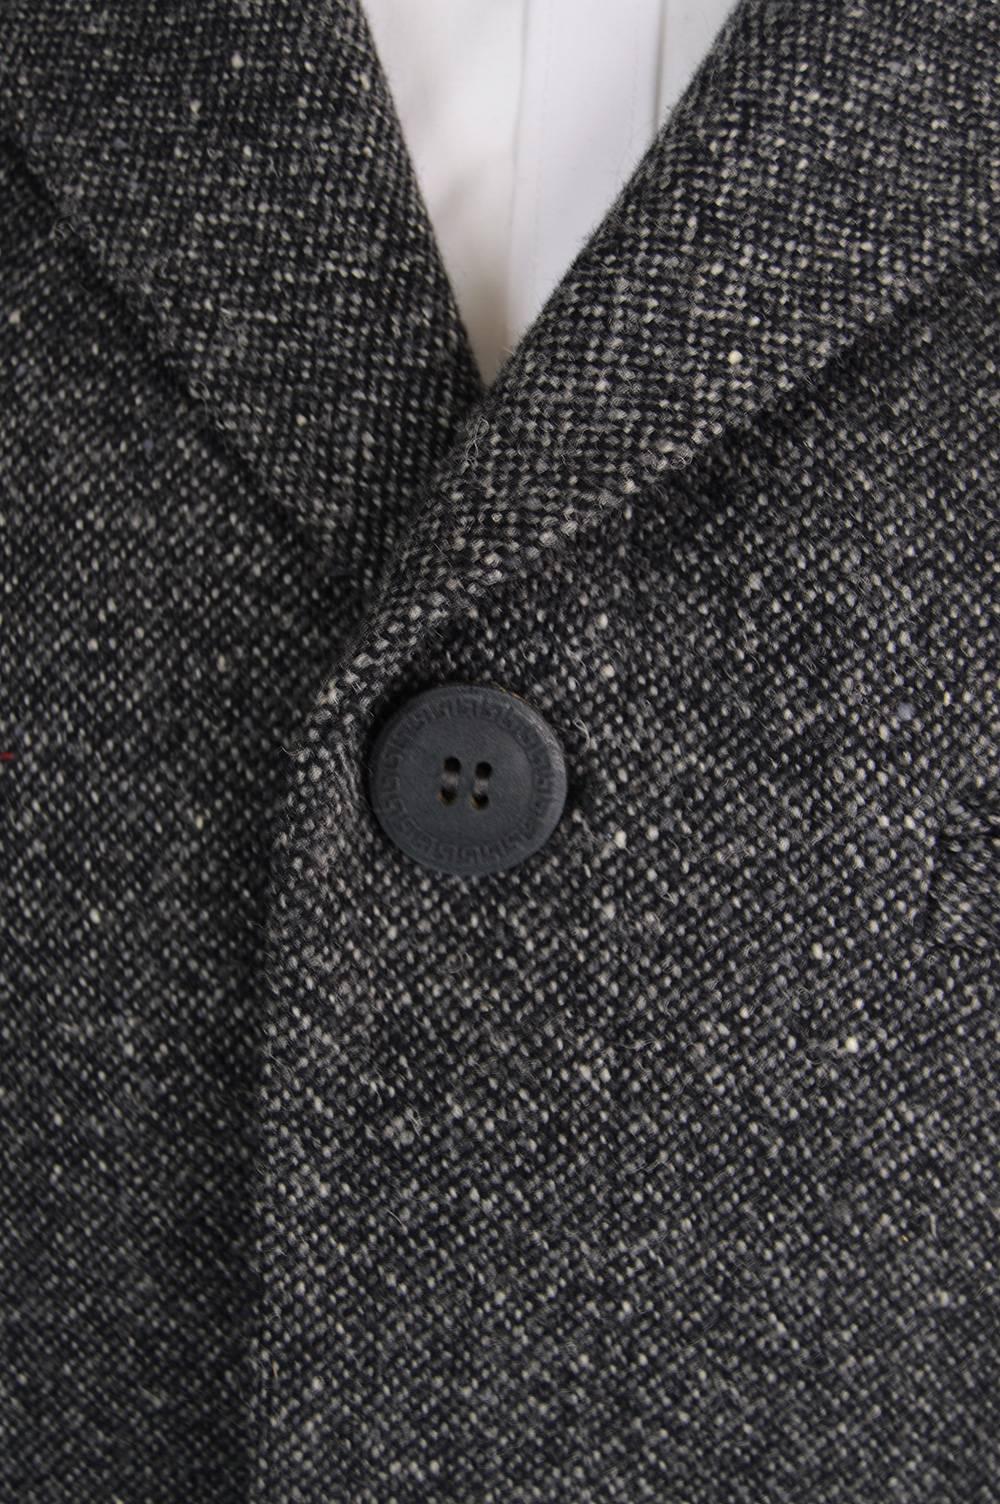 Gianni Versace Men's Vintage Grey Tweed Suit with wool boucle collar, 1990s 1